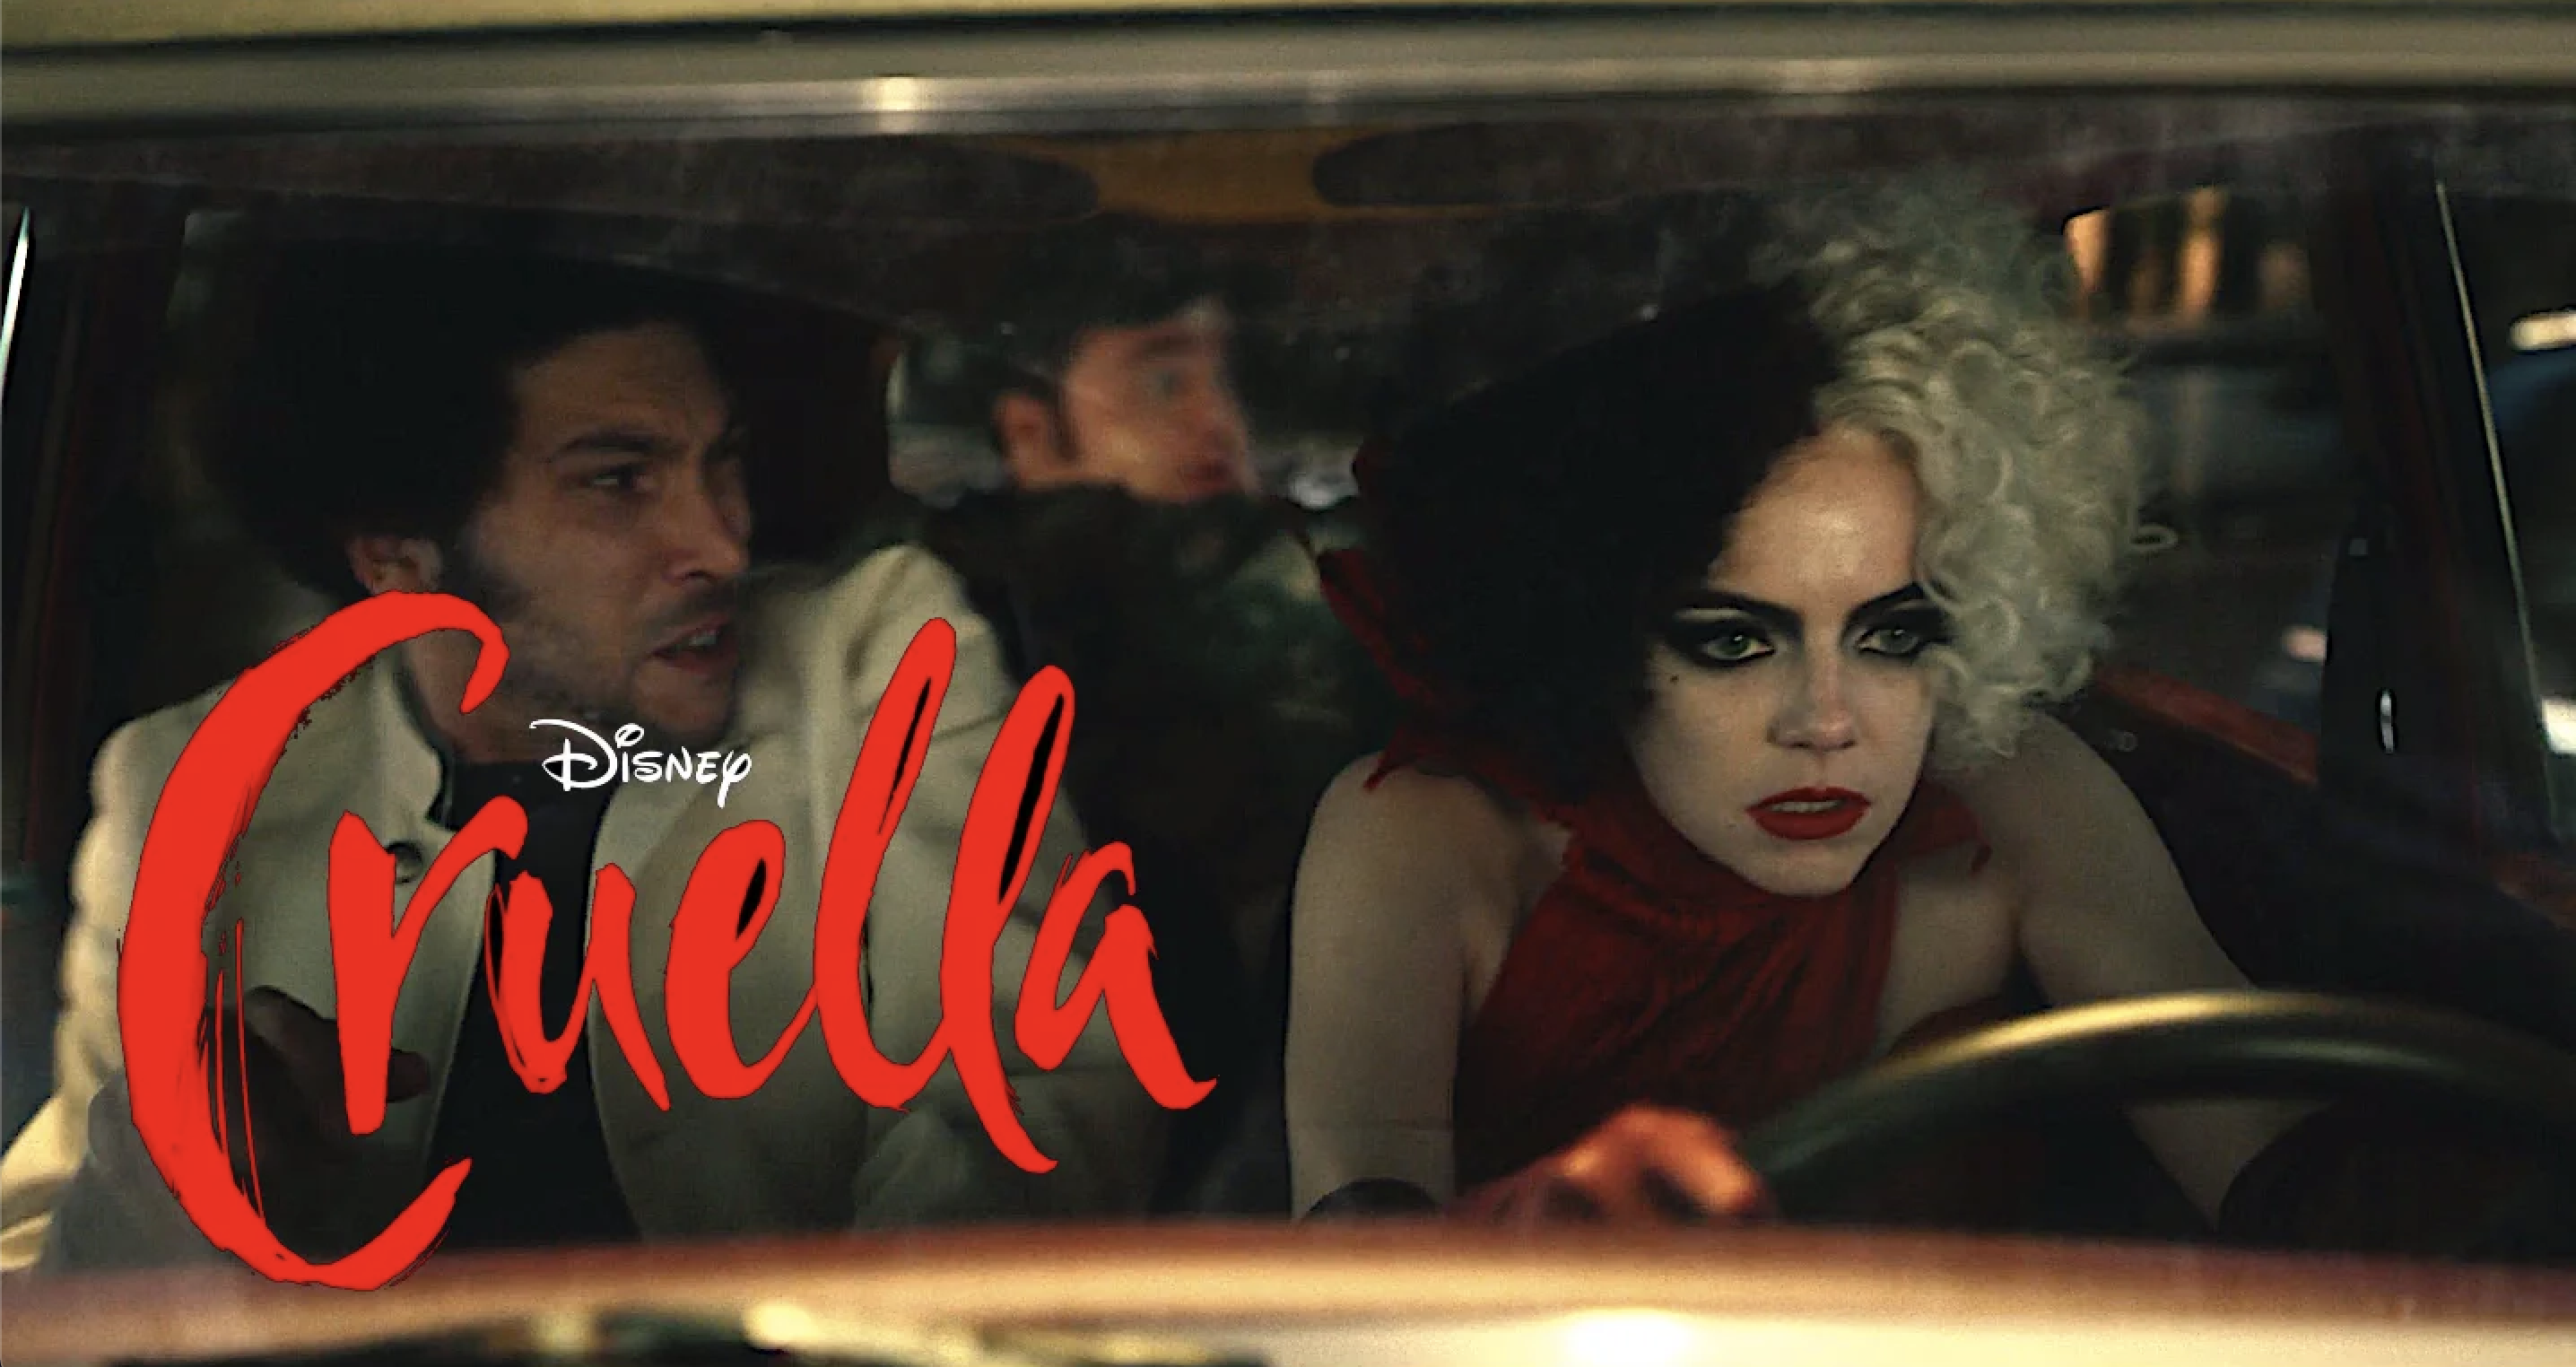 Disney's 'Cruella' Coming to the El Capitan Theatre with a Special Fan Event!